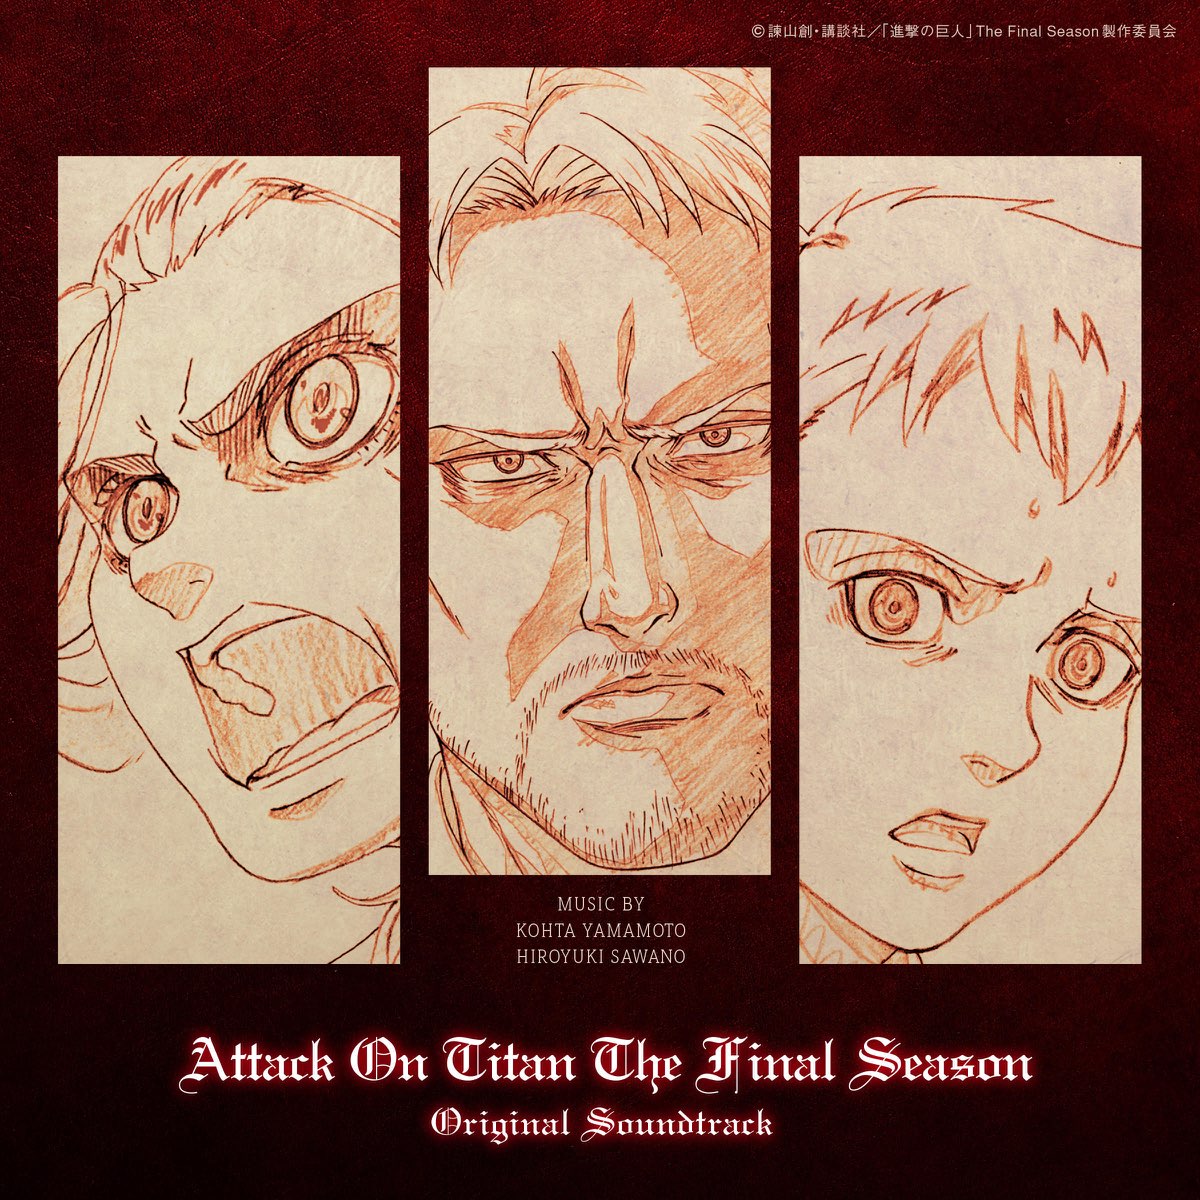 Attack On Titan The Final Season Original Soundtrack By Kohta Yamamoto 澤野弘之 On Apple Music